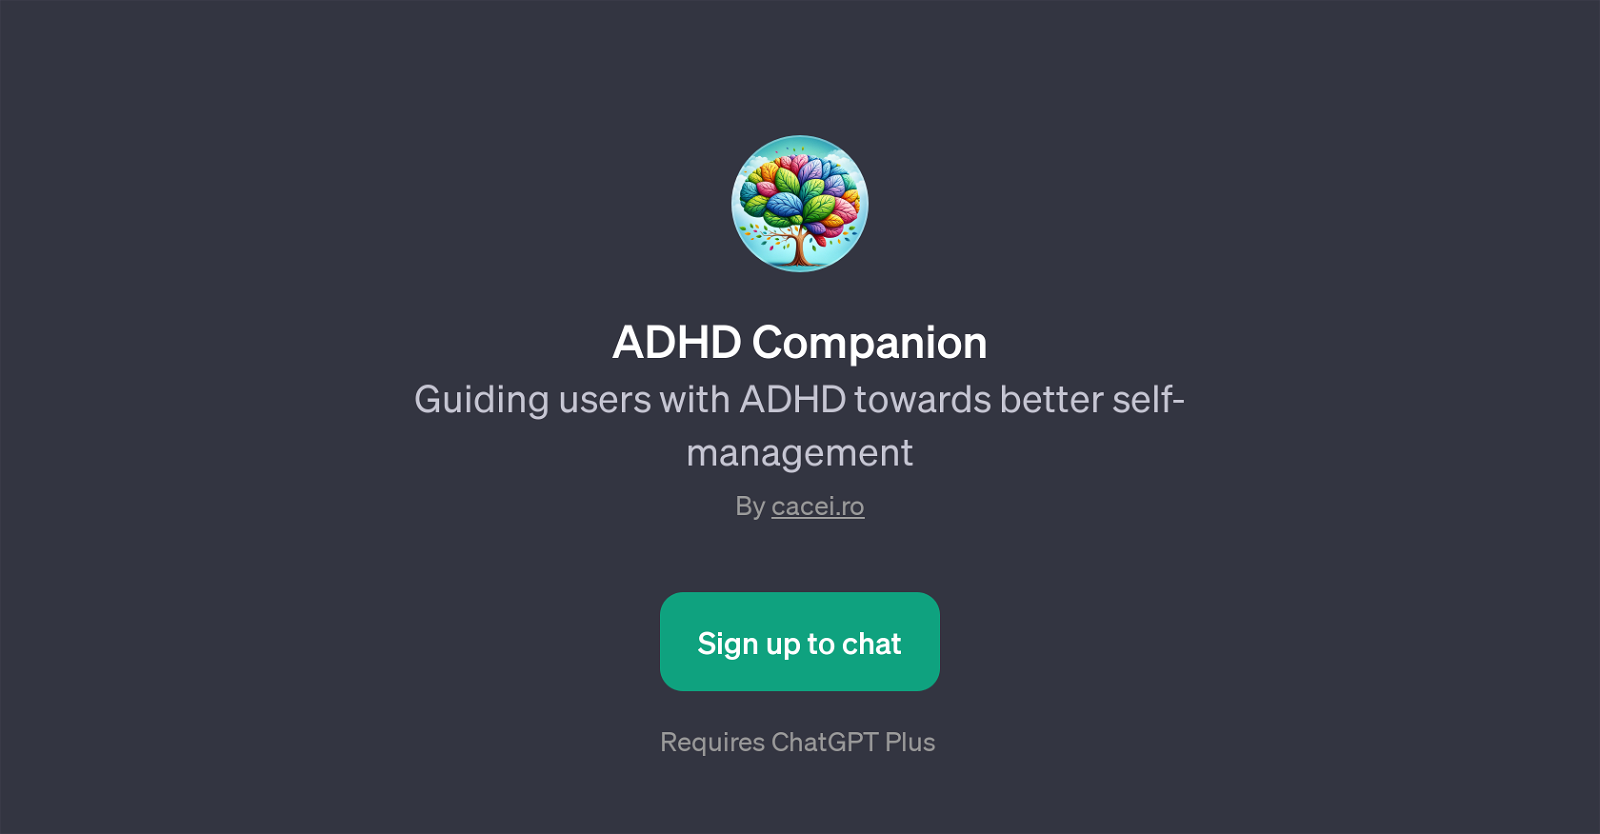 ADHD Companion website